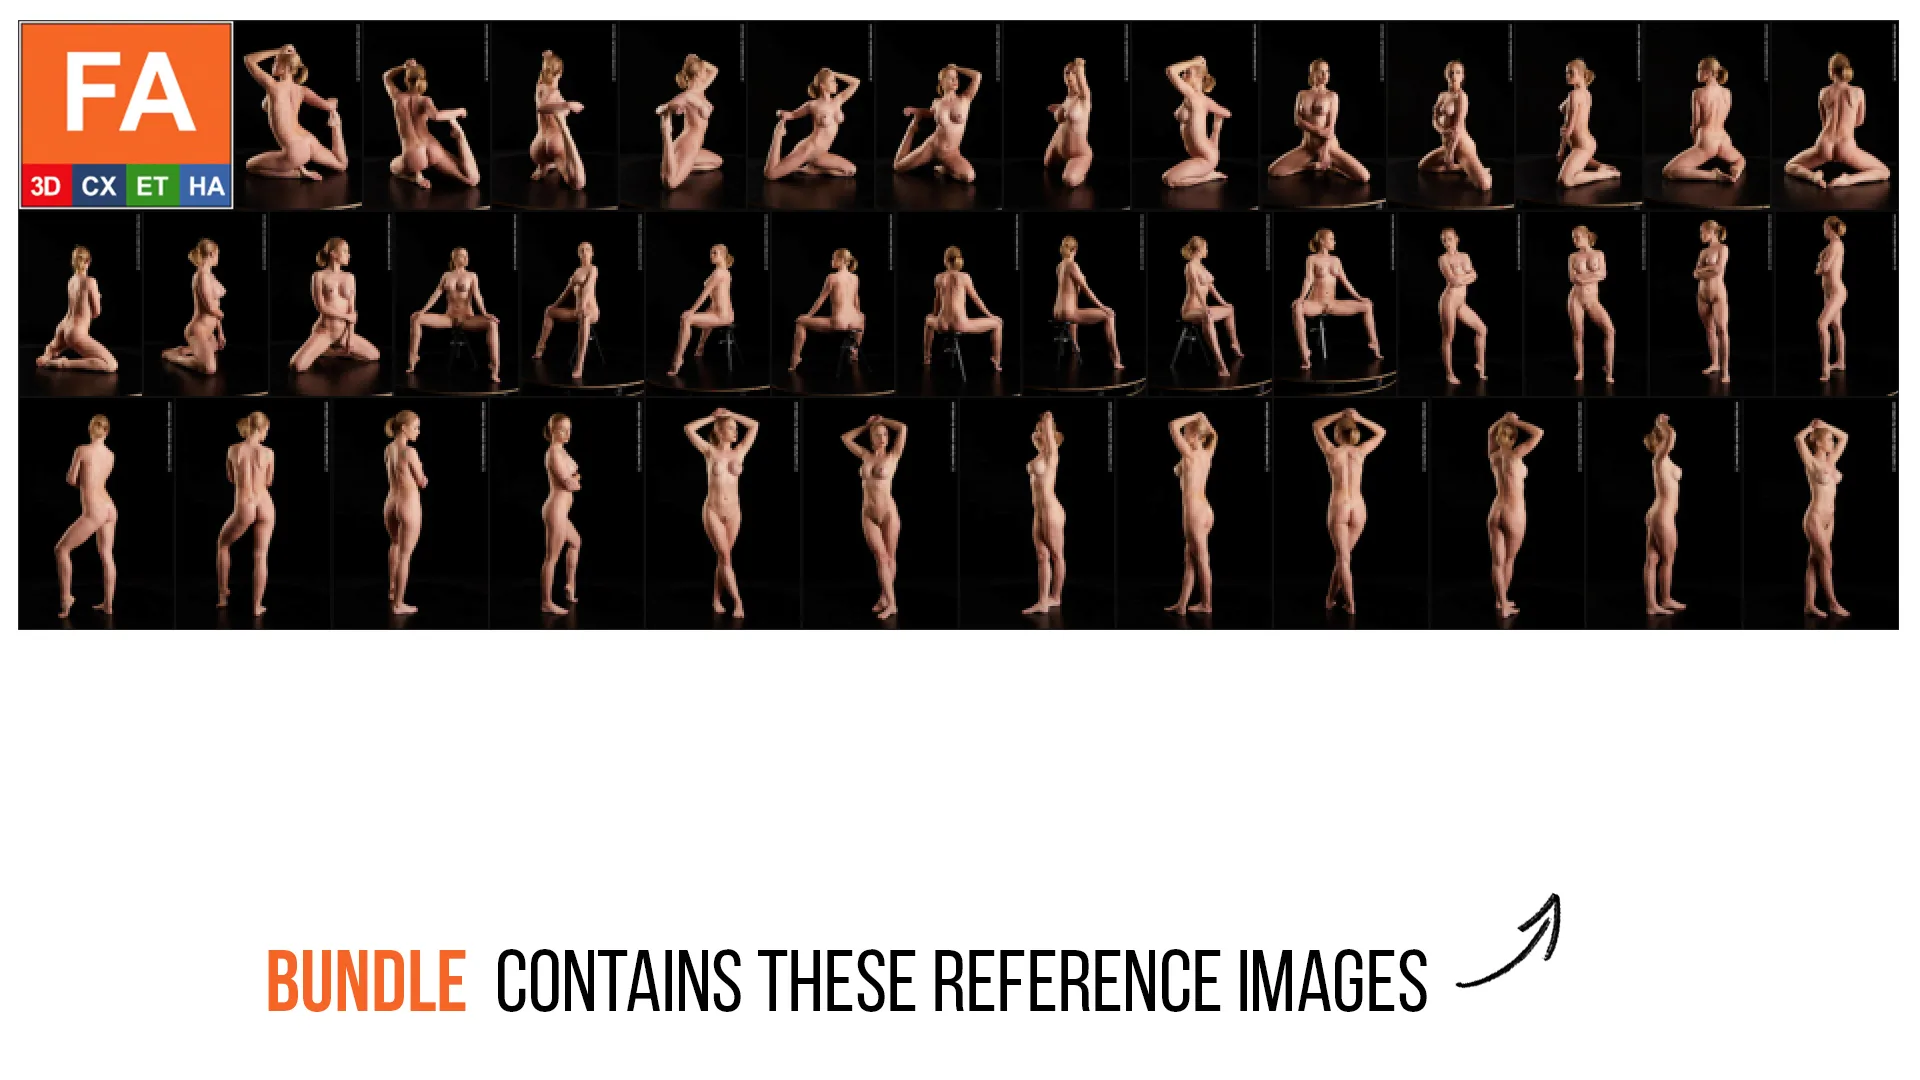 Female Anatomy | Vinna Reed 5 Various Poses | 40 Photos